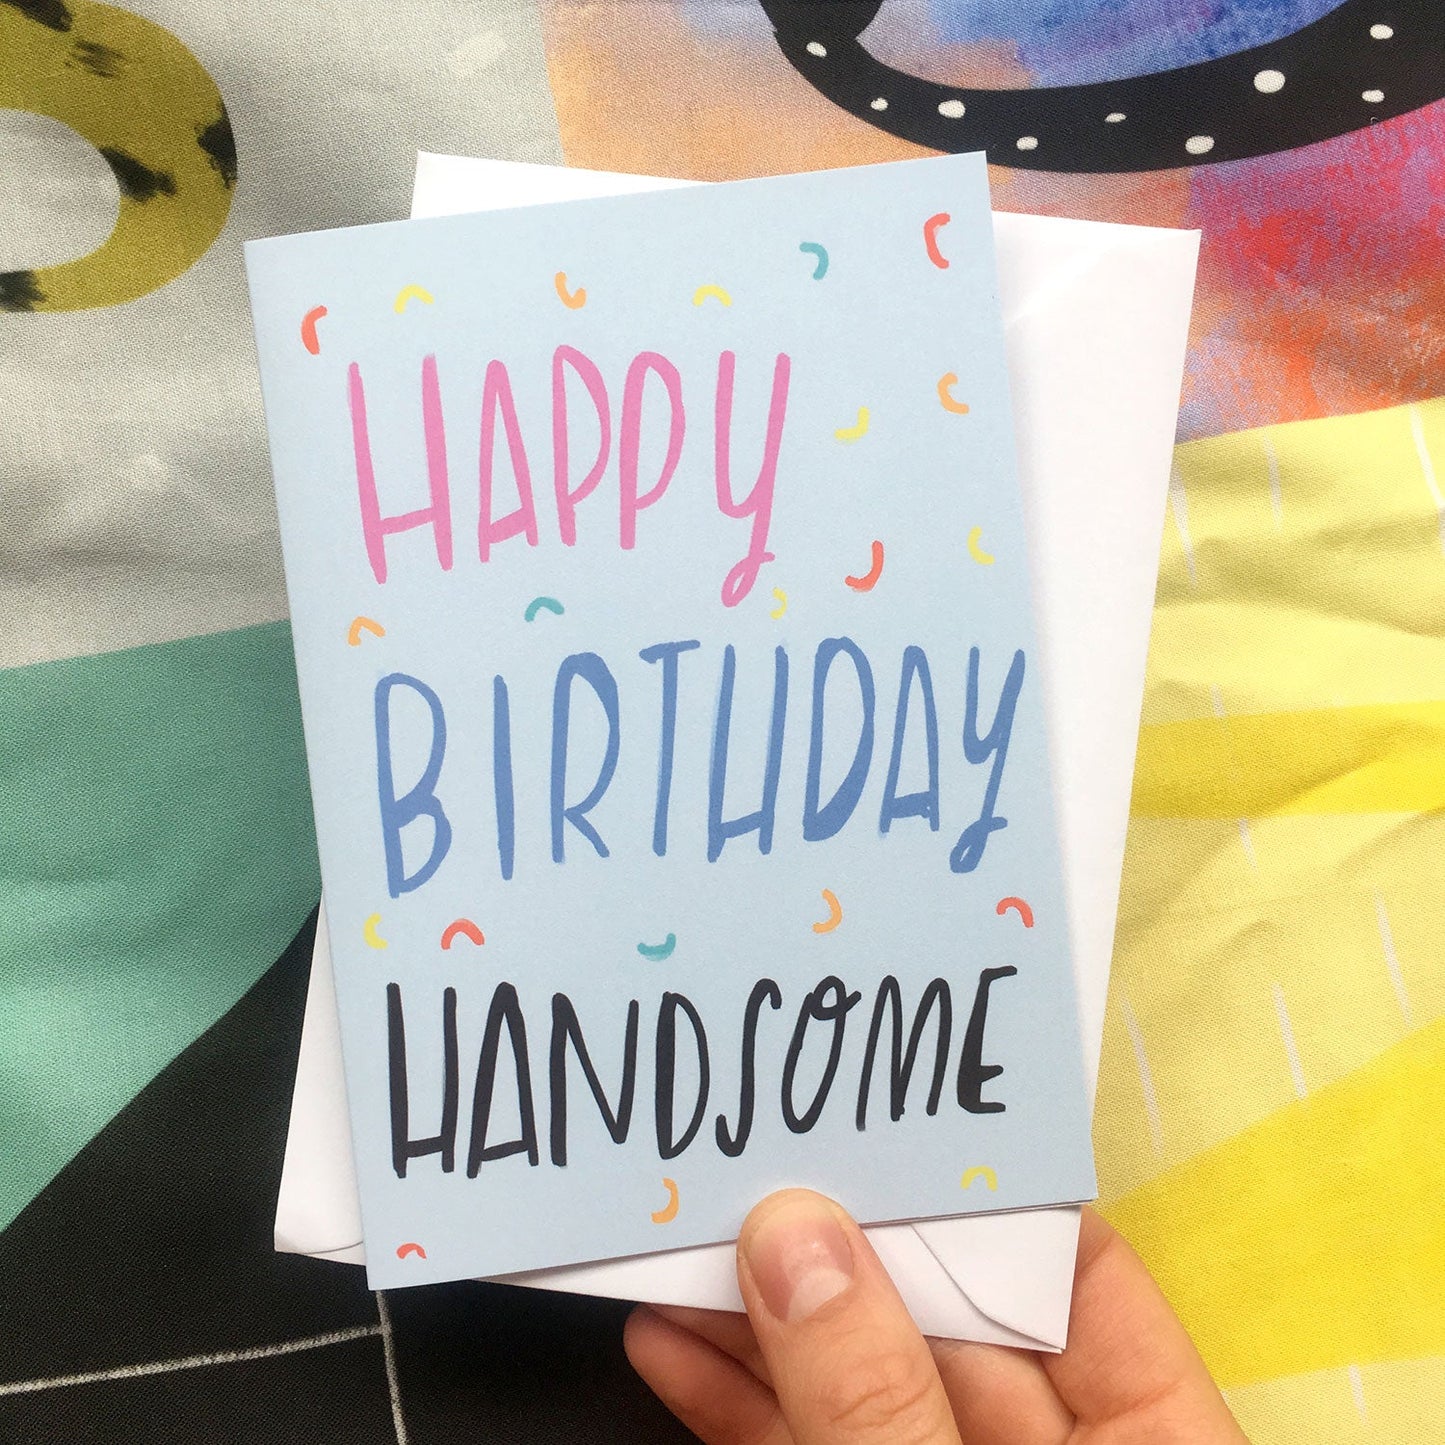 Happy Birthday Handsome card